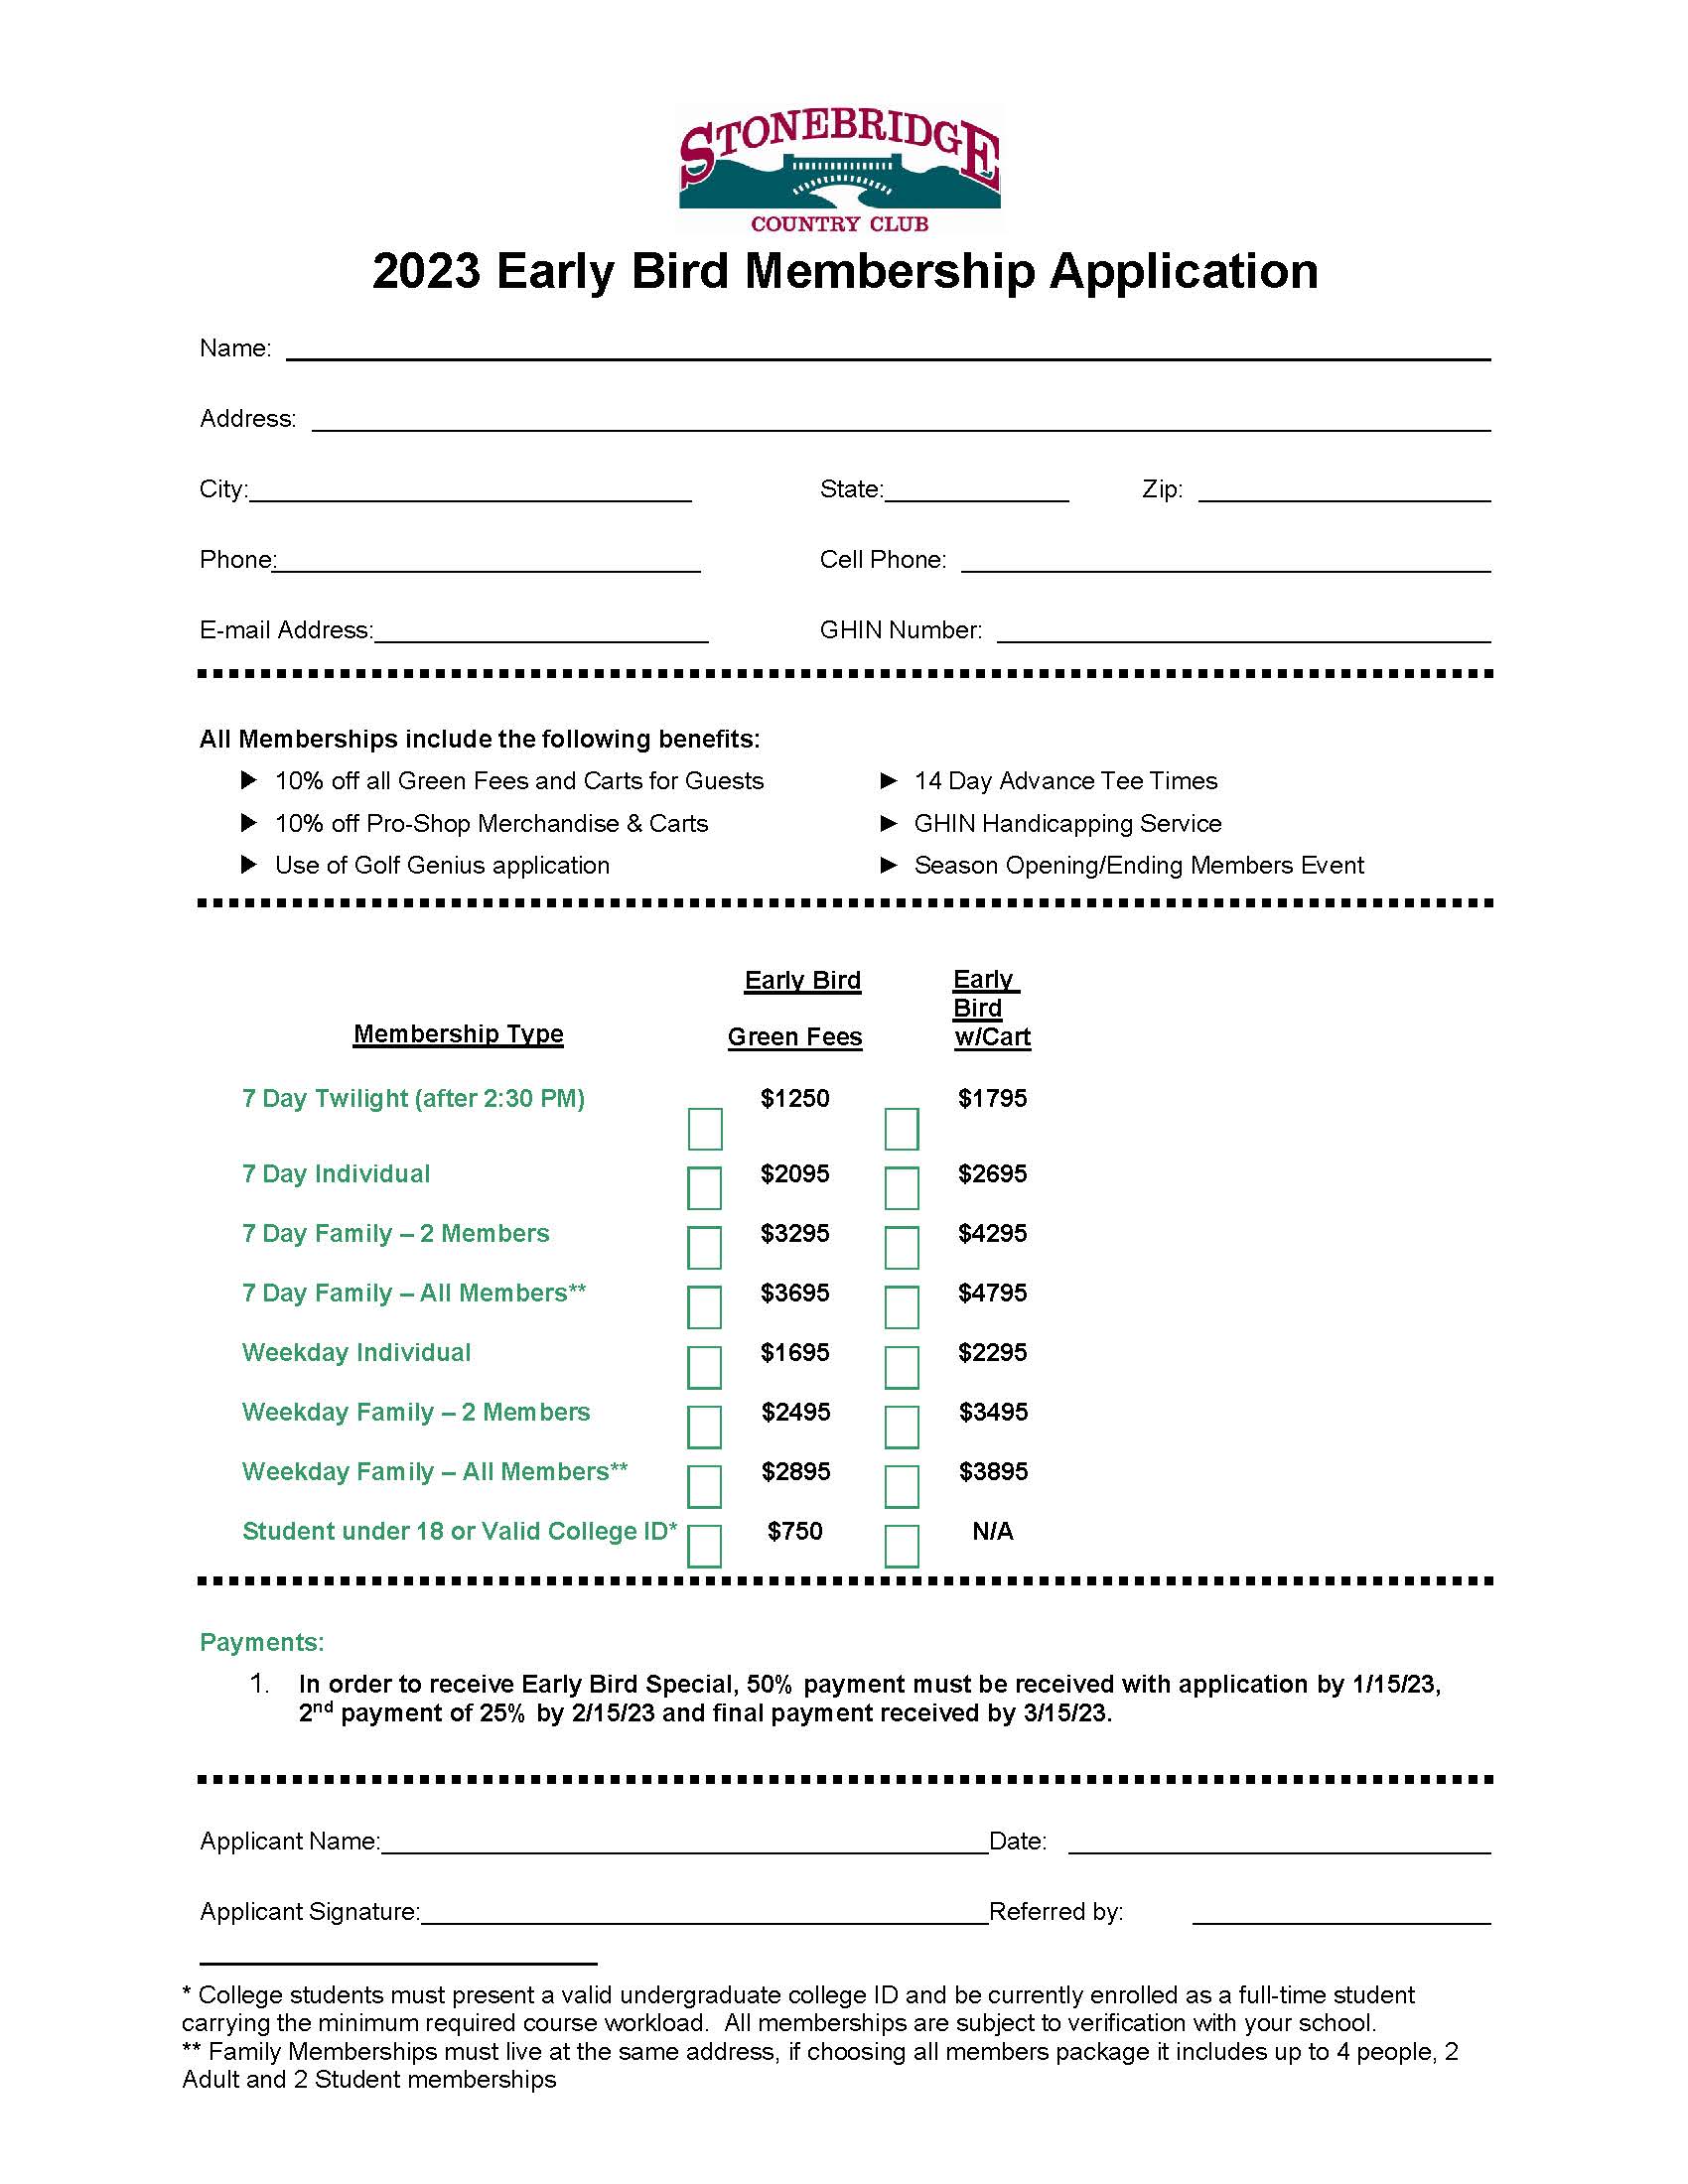 2023 Membership Application Early Bird Page 1